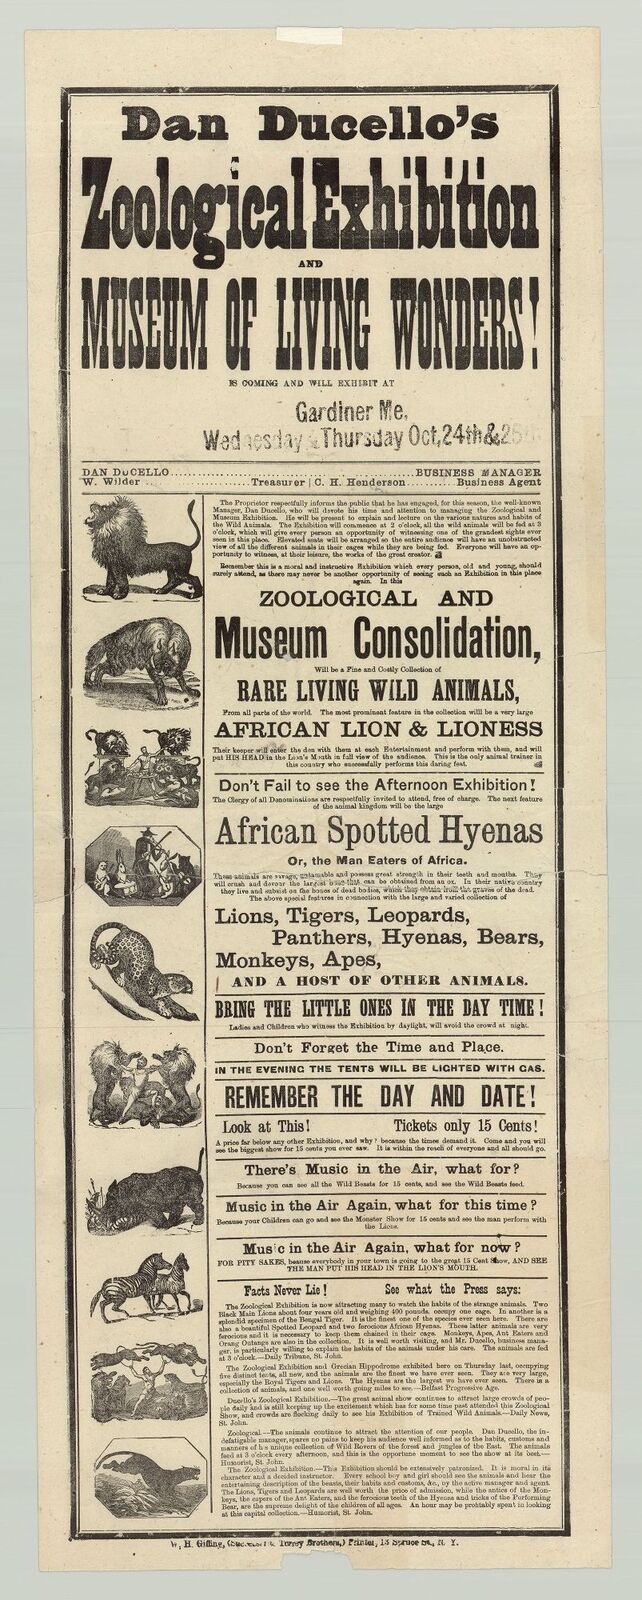 Dan Ducello’s Zoological Exhibition…of Living Wonders broadside c. 1880